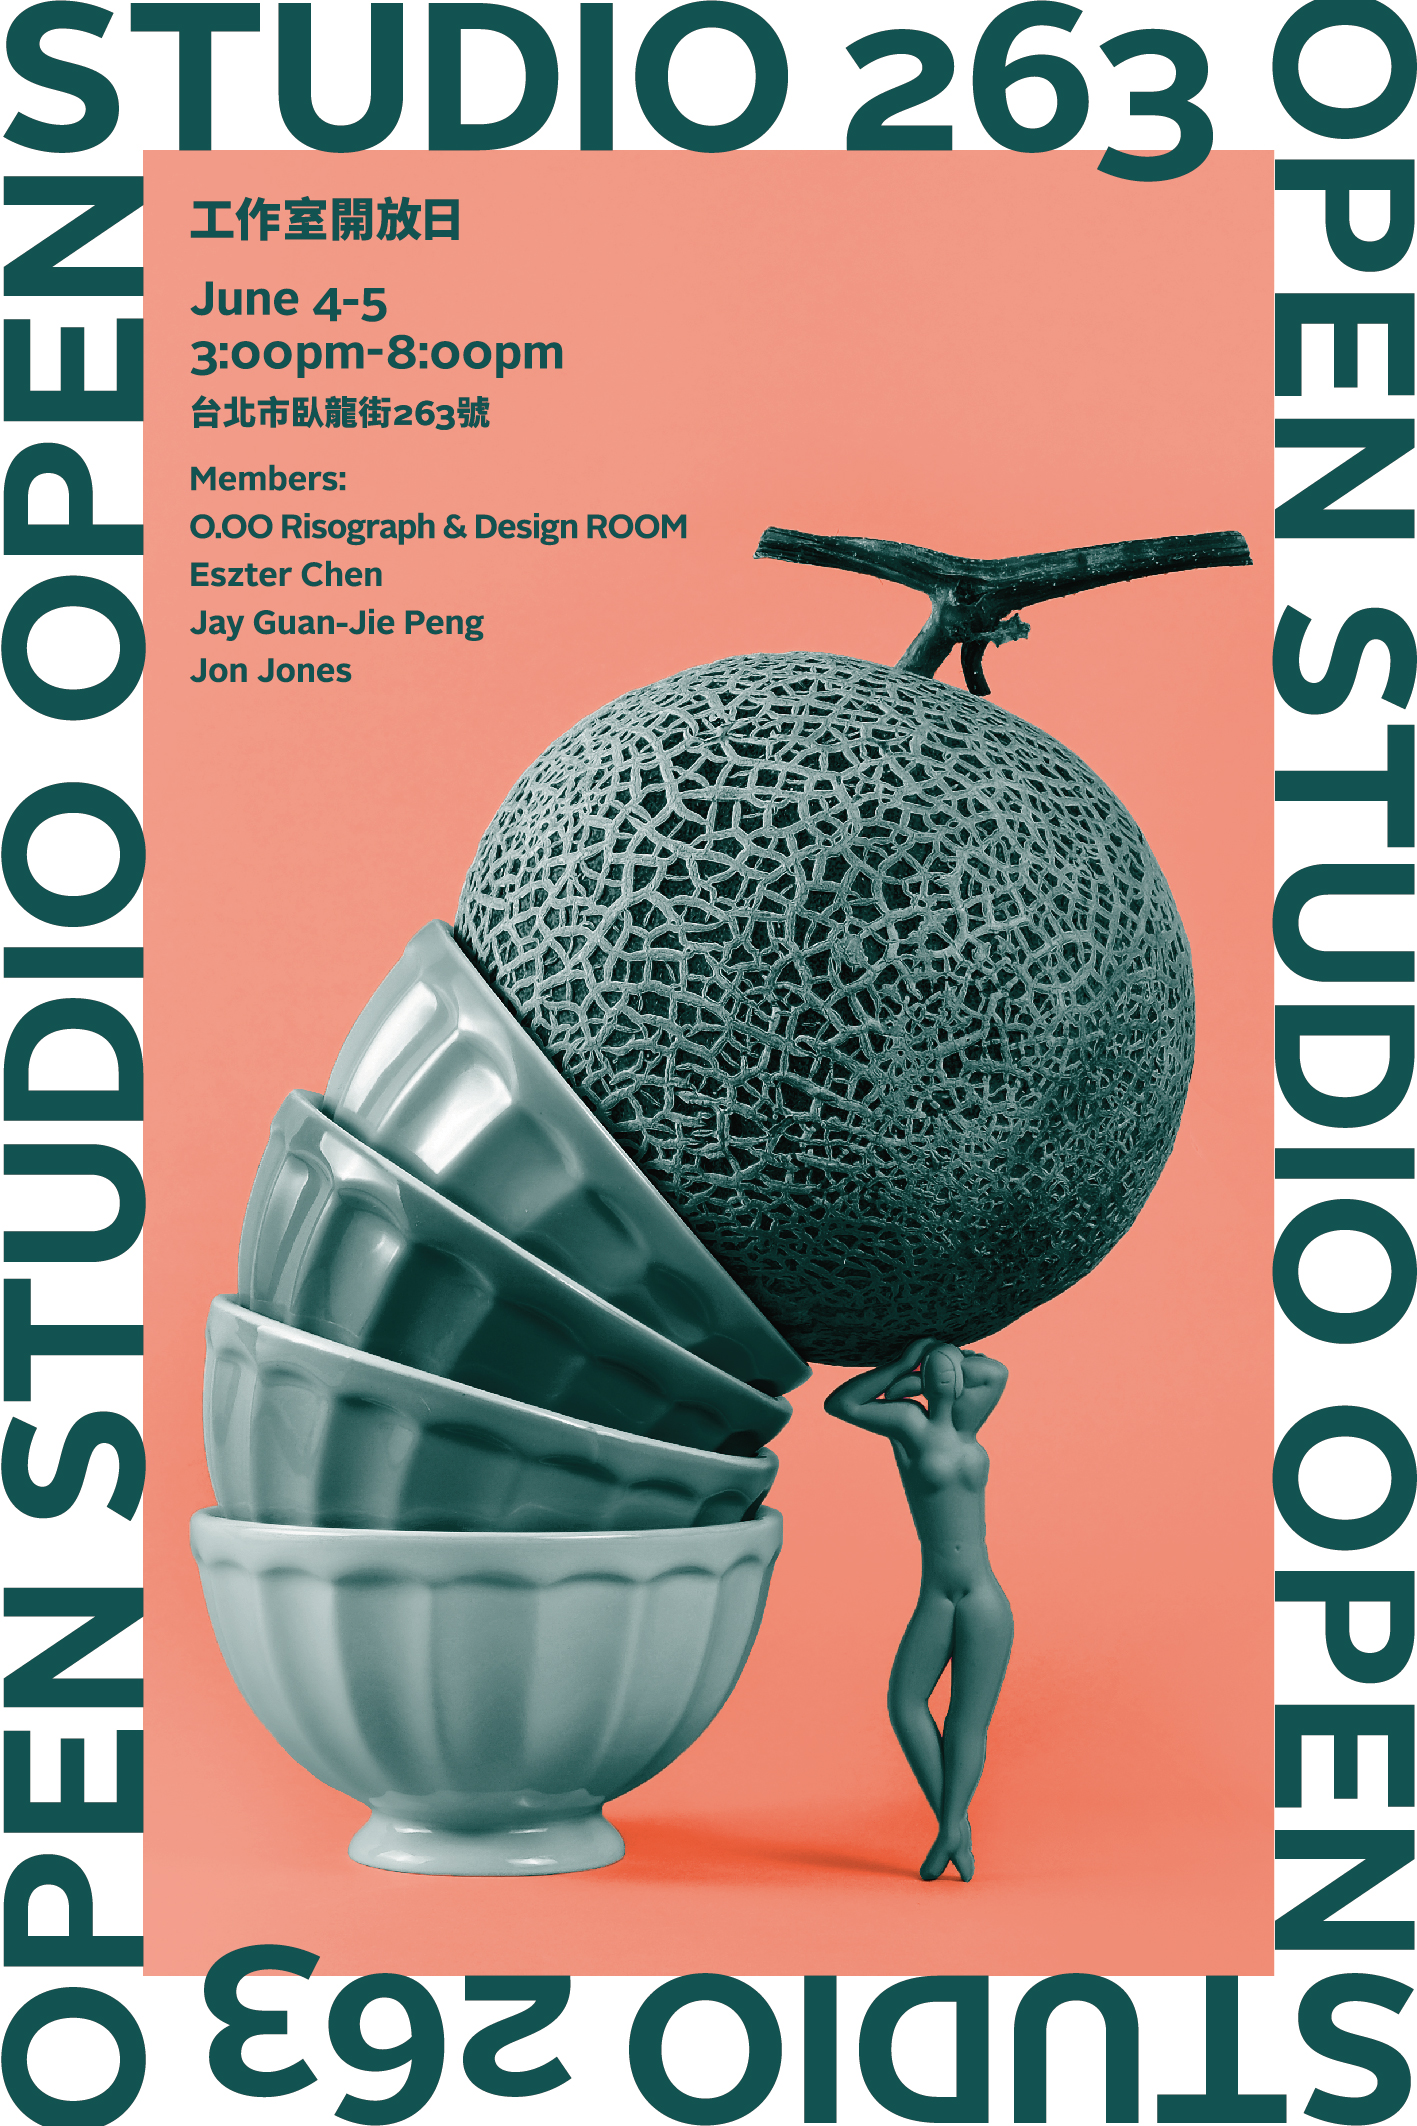 Studio 263 Open Studio, Image courtesy of Jay Guan-Jie Peng